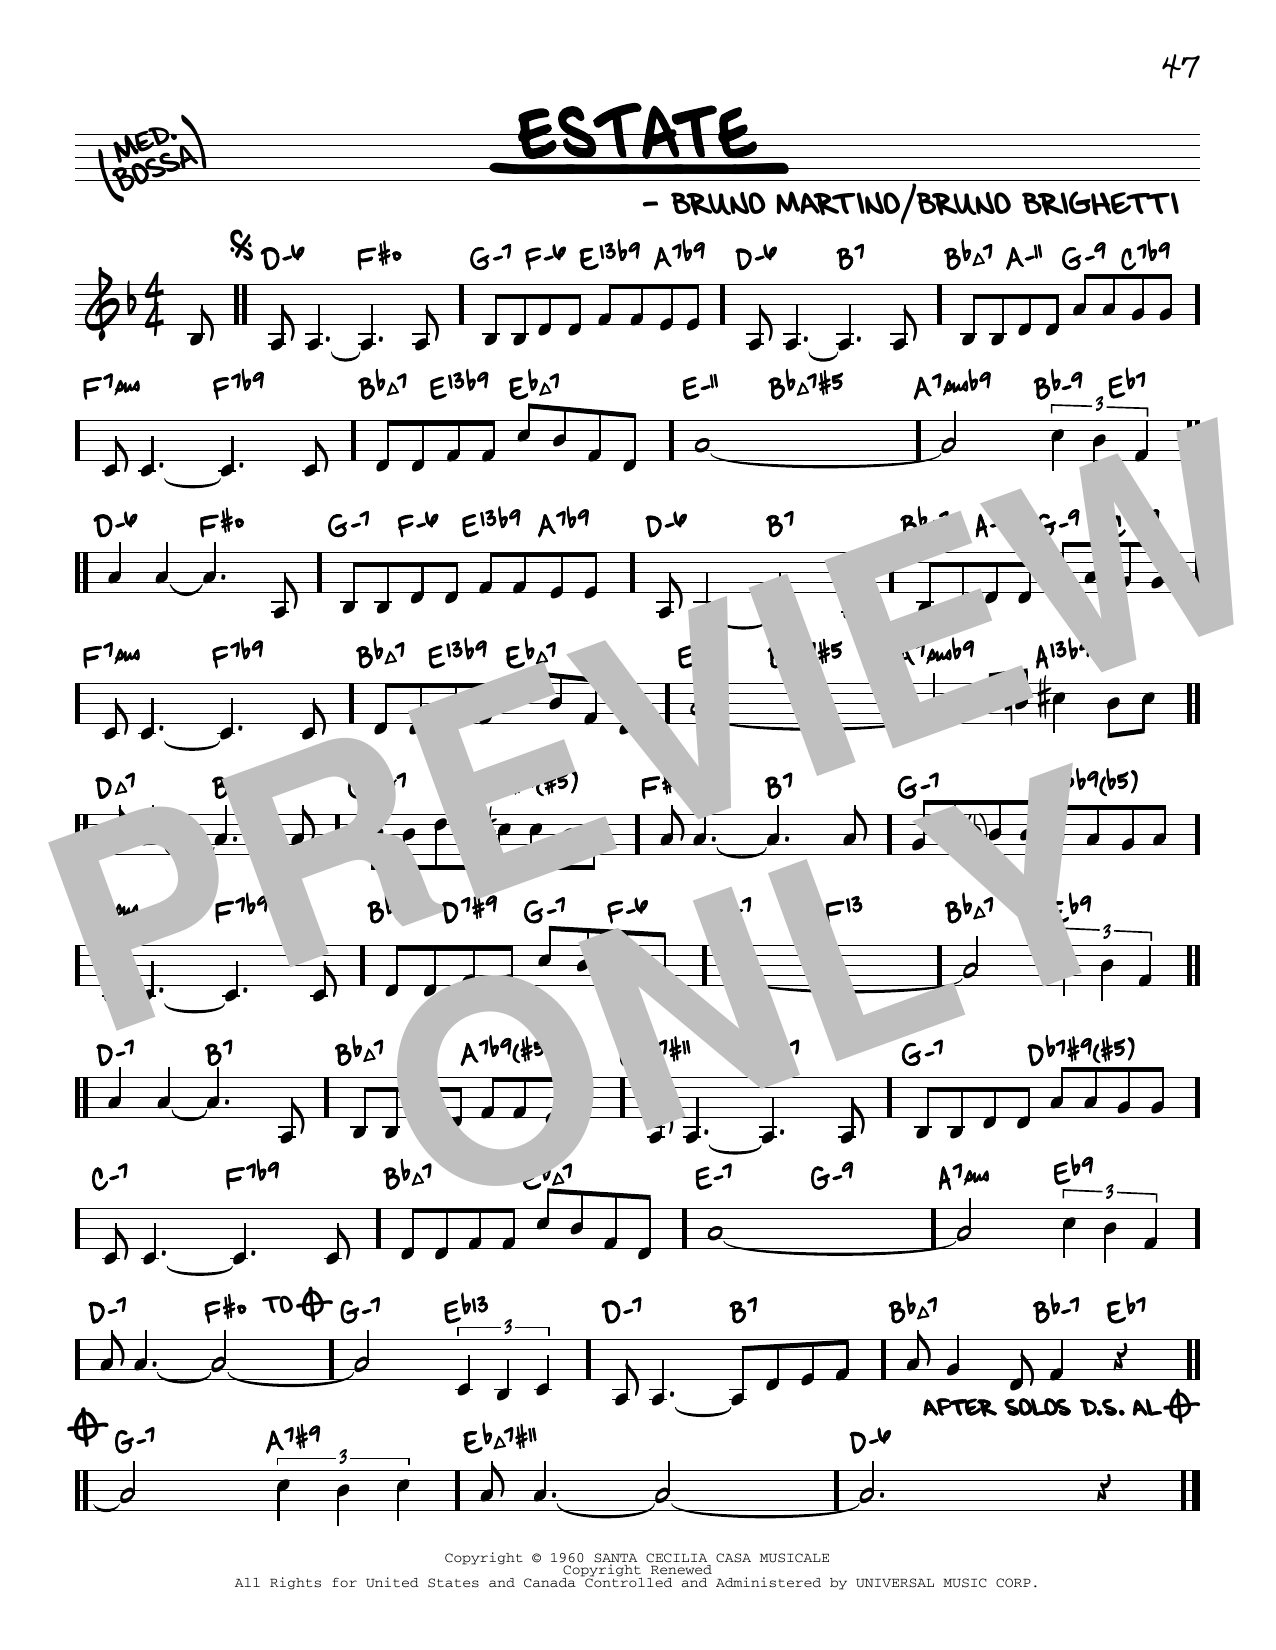 Bruno Martino Estate (arr. David Hazeltine) Sheet Music Notes & Chords for Real Book – Enhanced Chords - Download or Print PDF